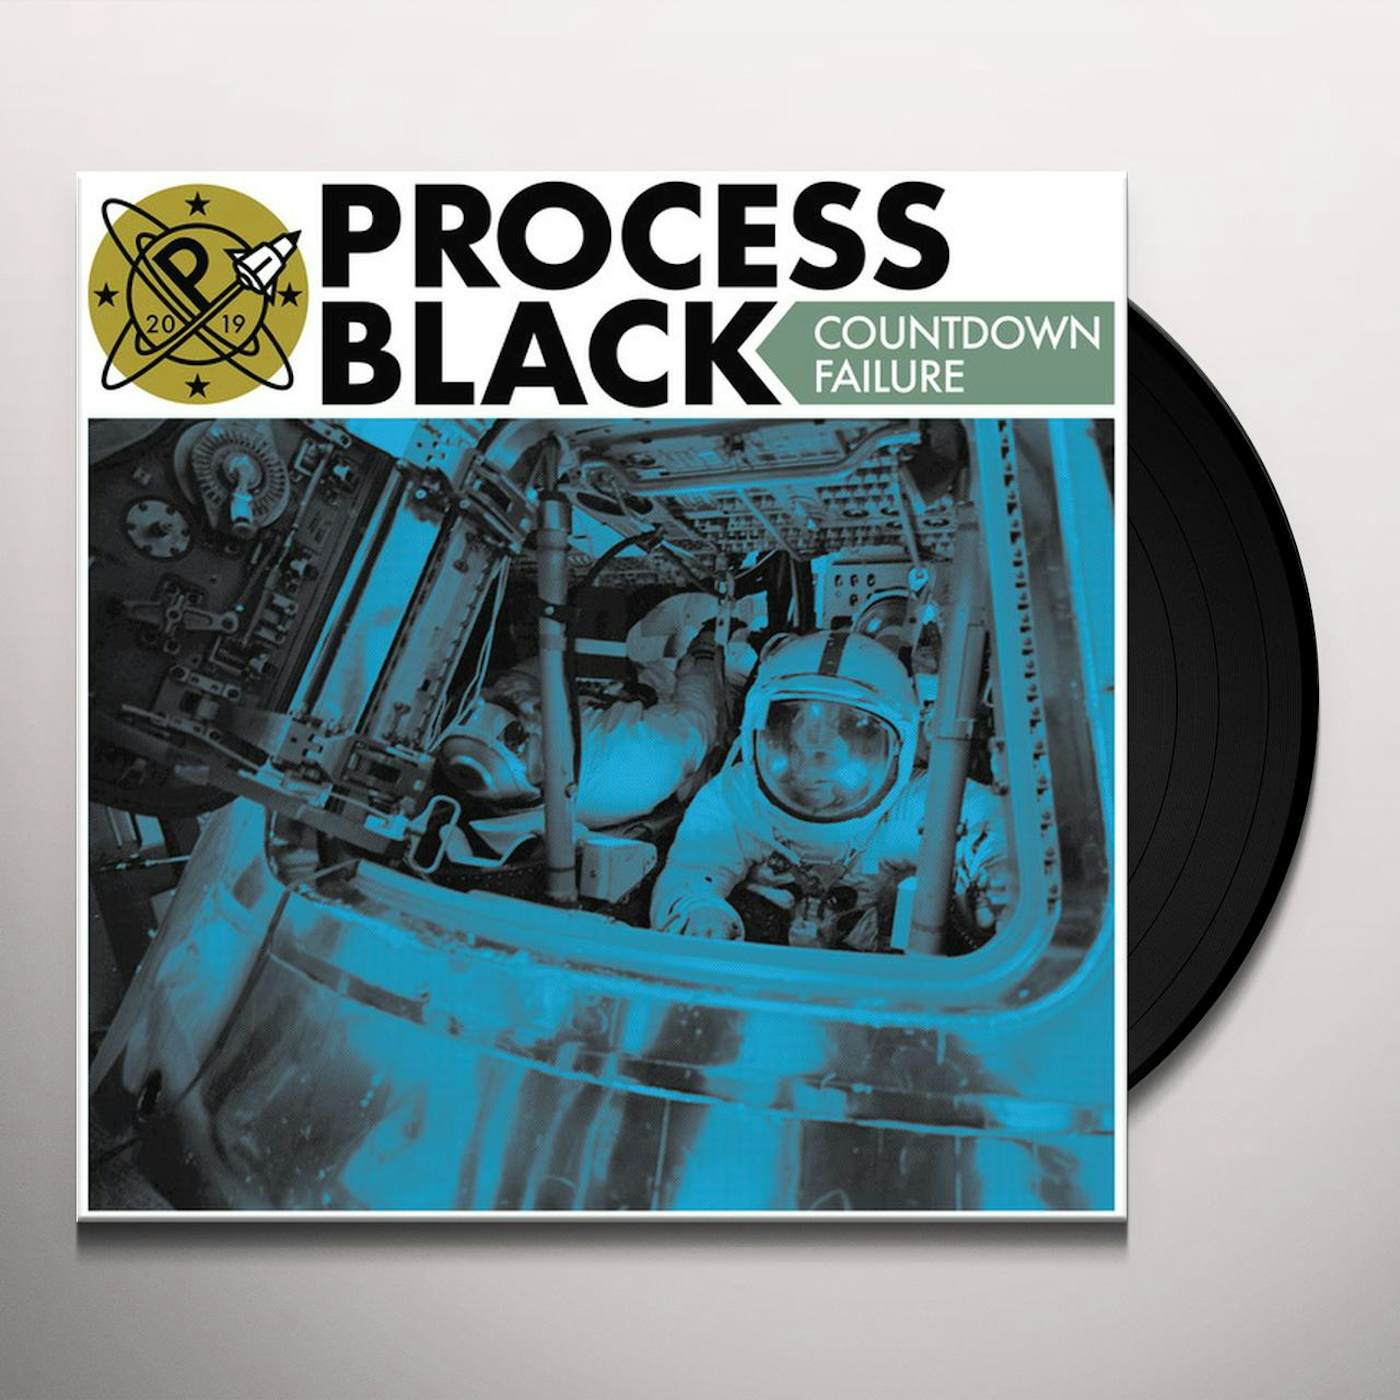 Process Black Countdown Failure Vinyl Record